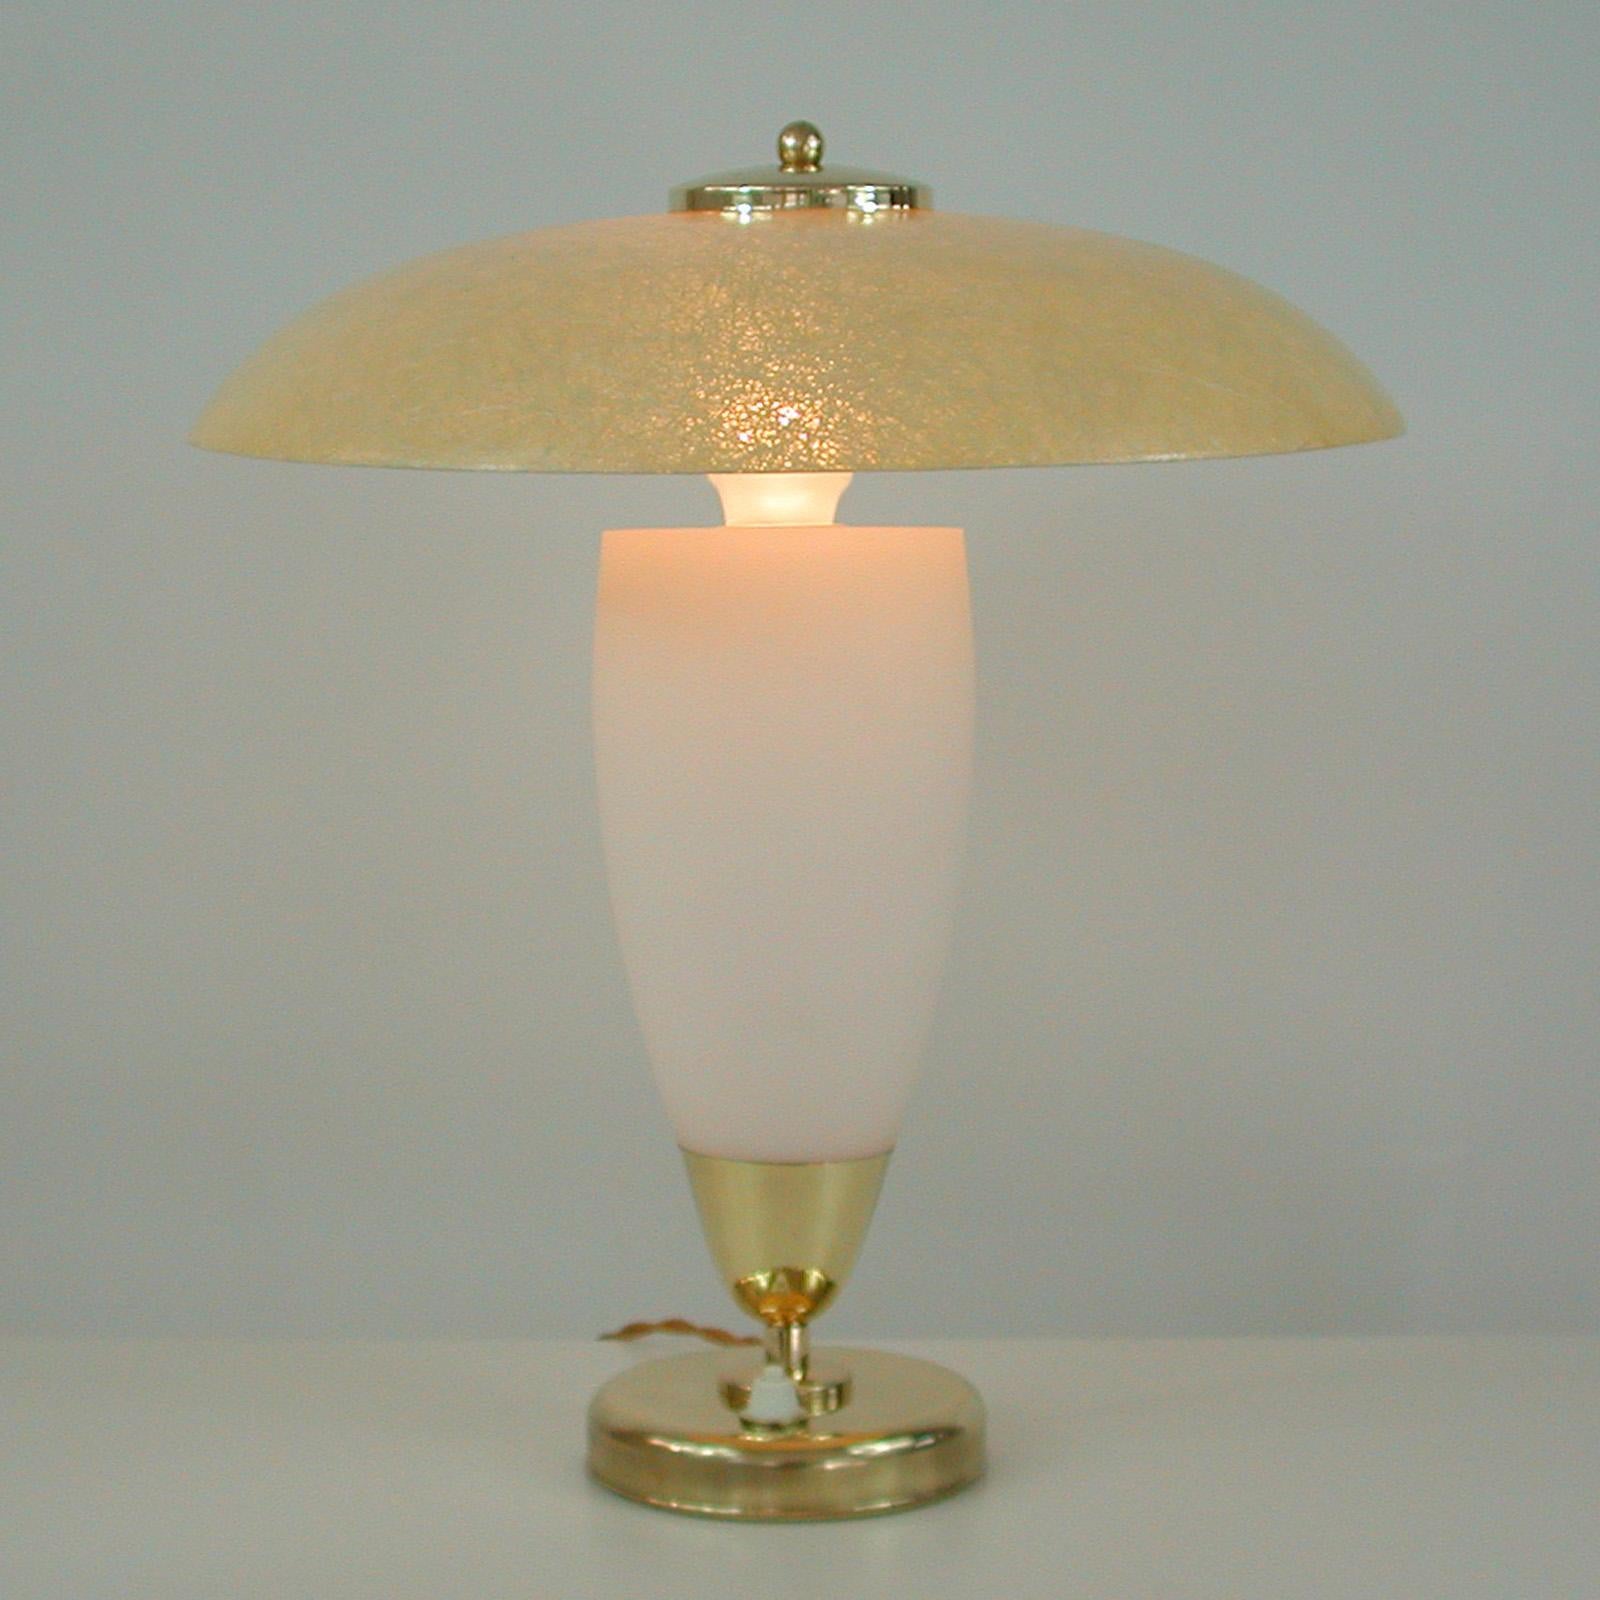 Midcentury Swedish Modern Brass, Opaline and Fiberglass Saucer Table Lamp, 1950s For Sale 6